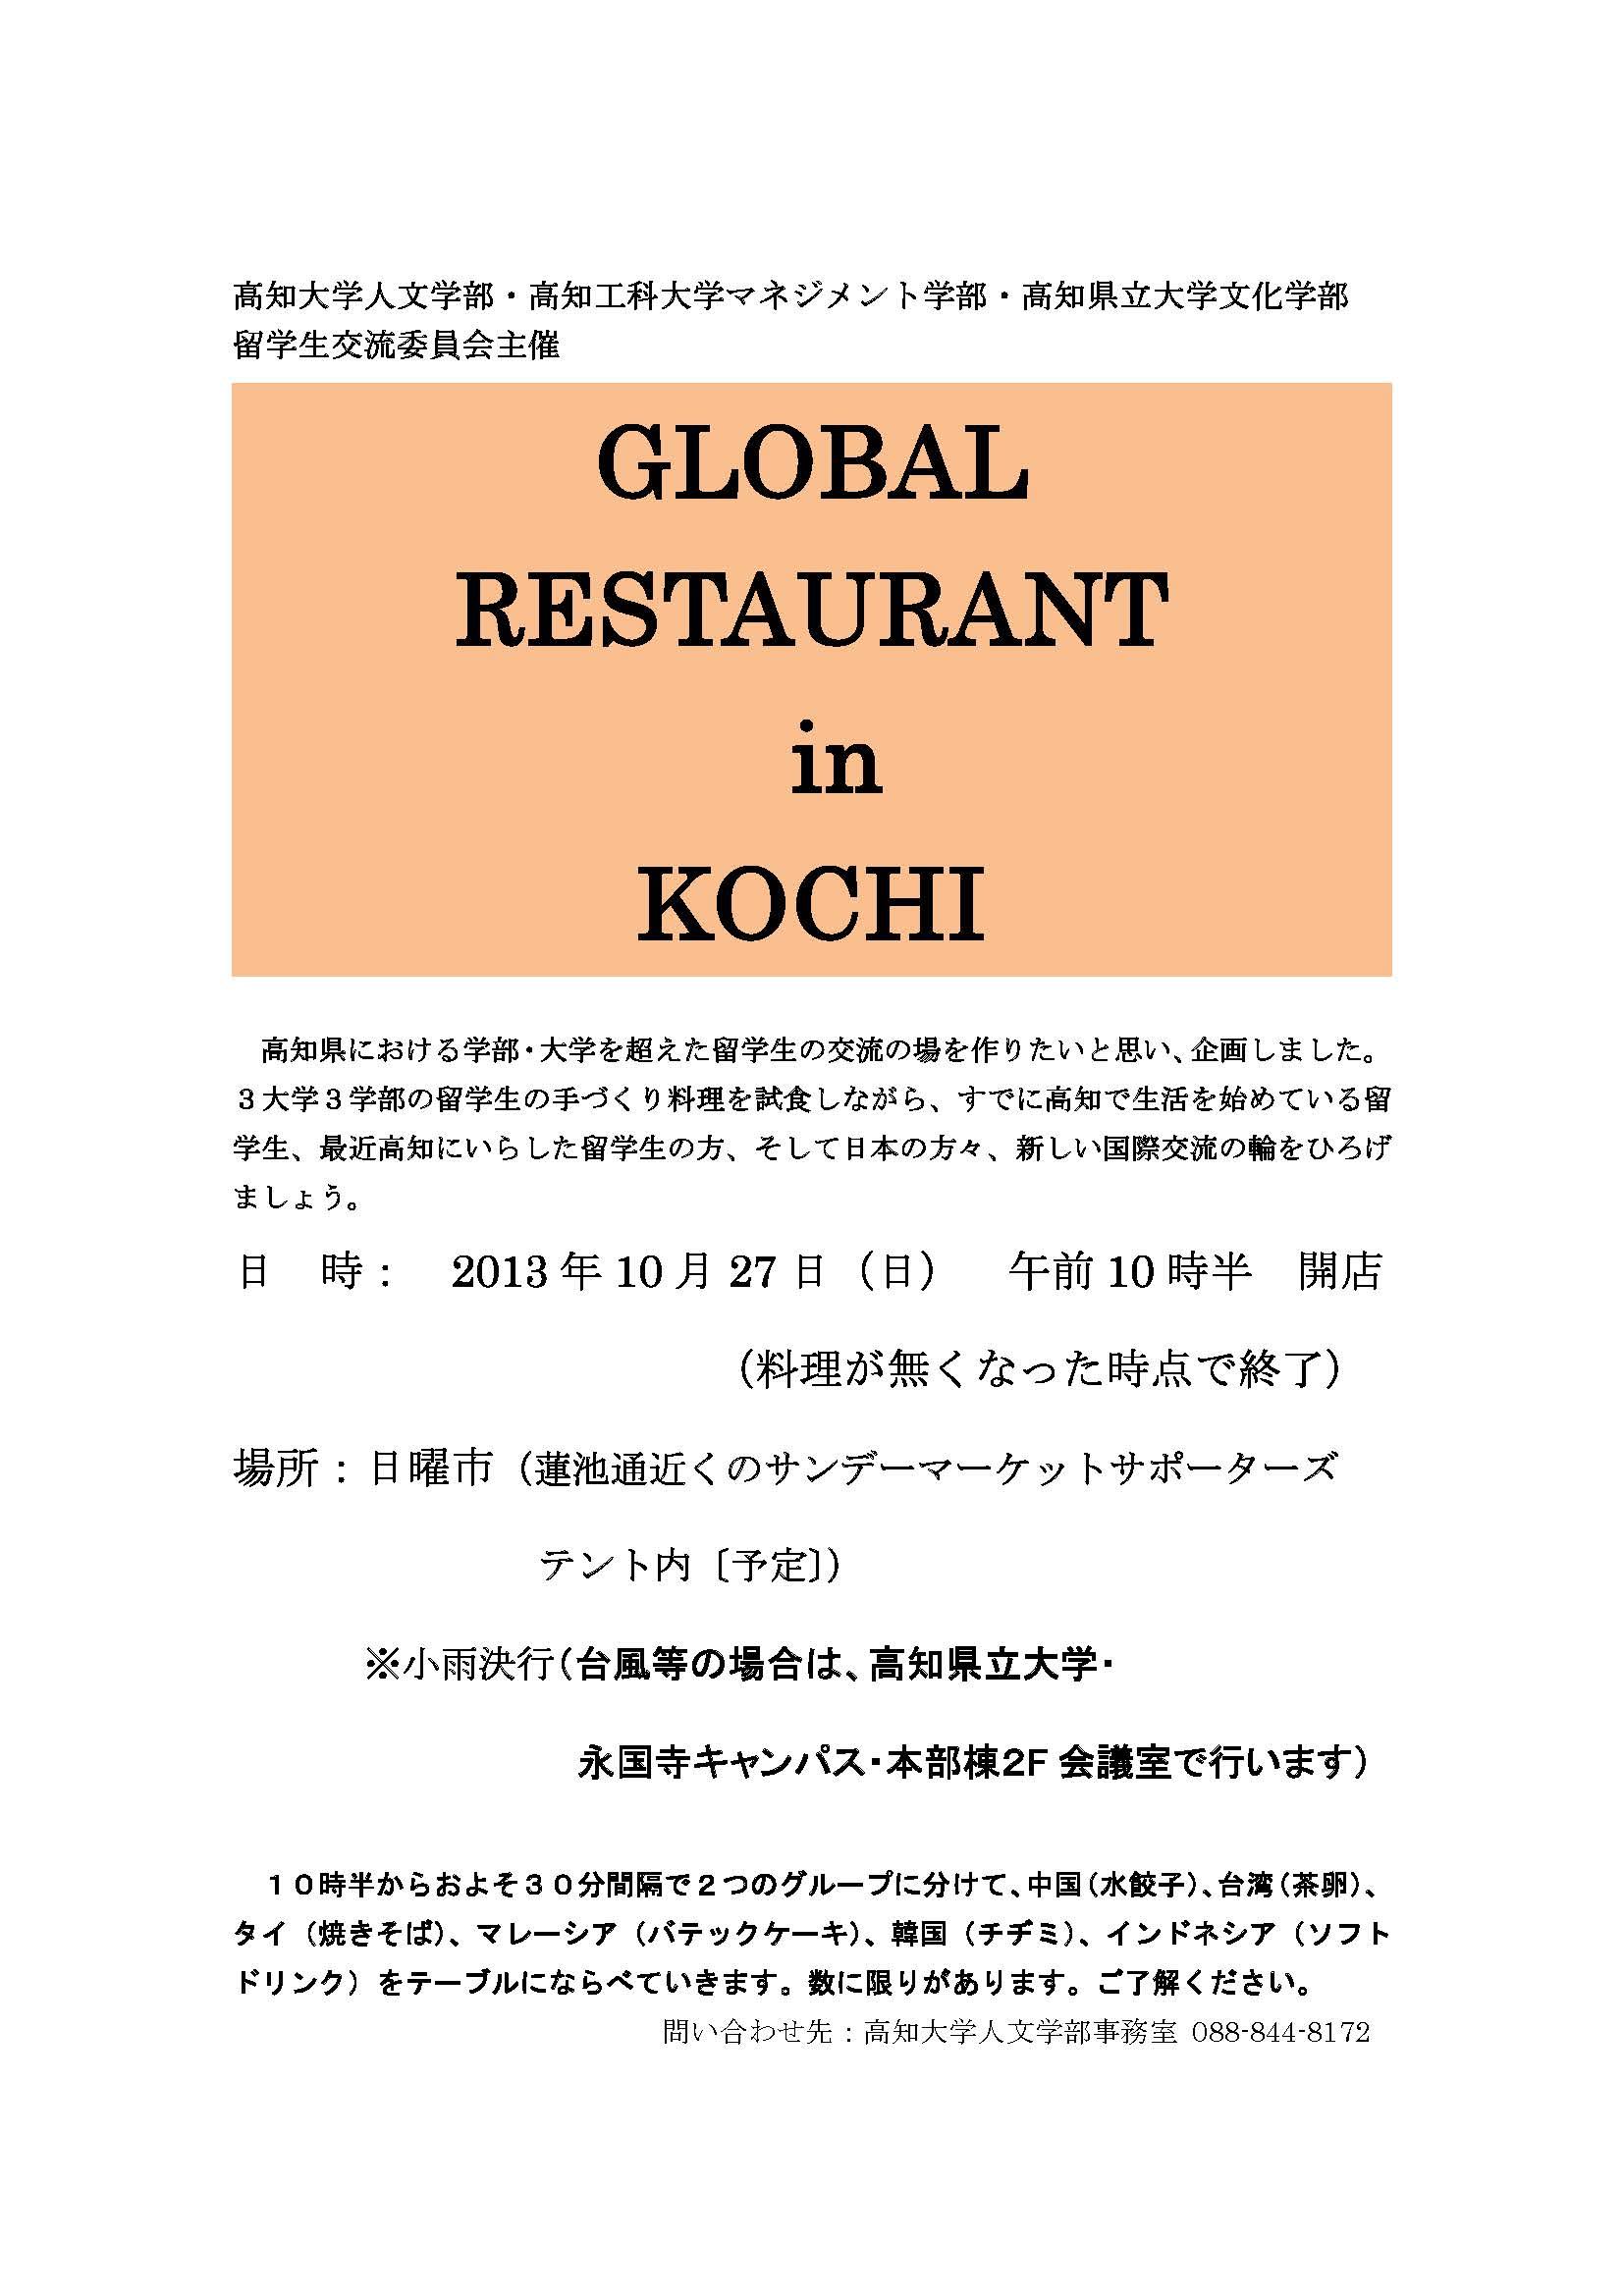 GLOBAL RESTAURANT in KOCHI